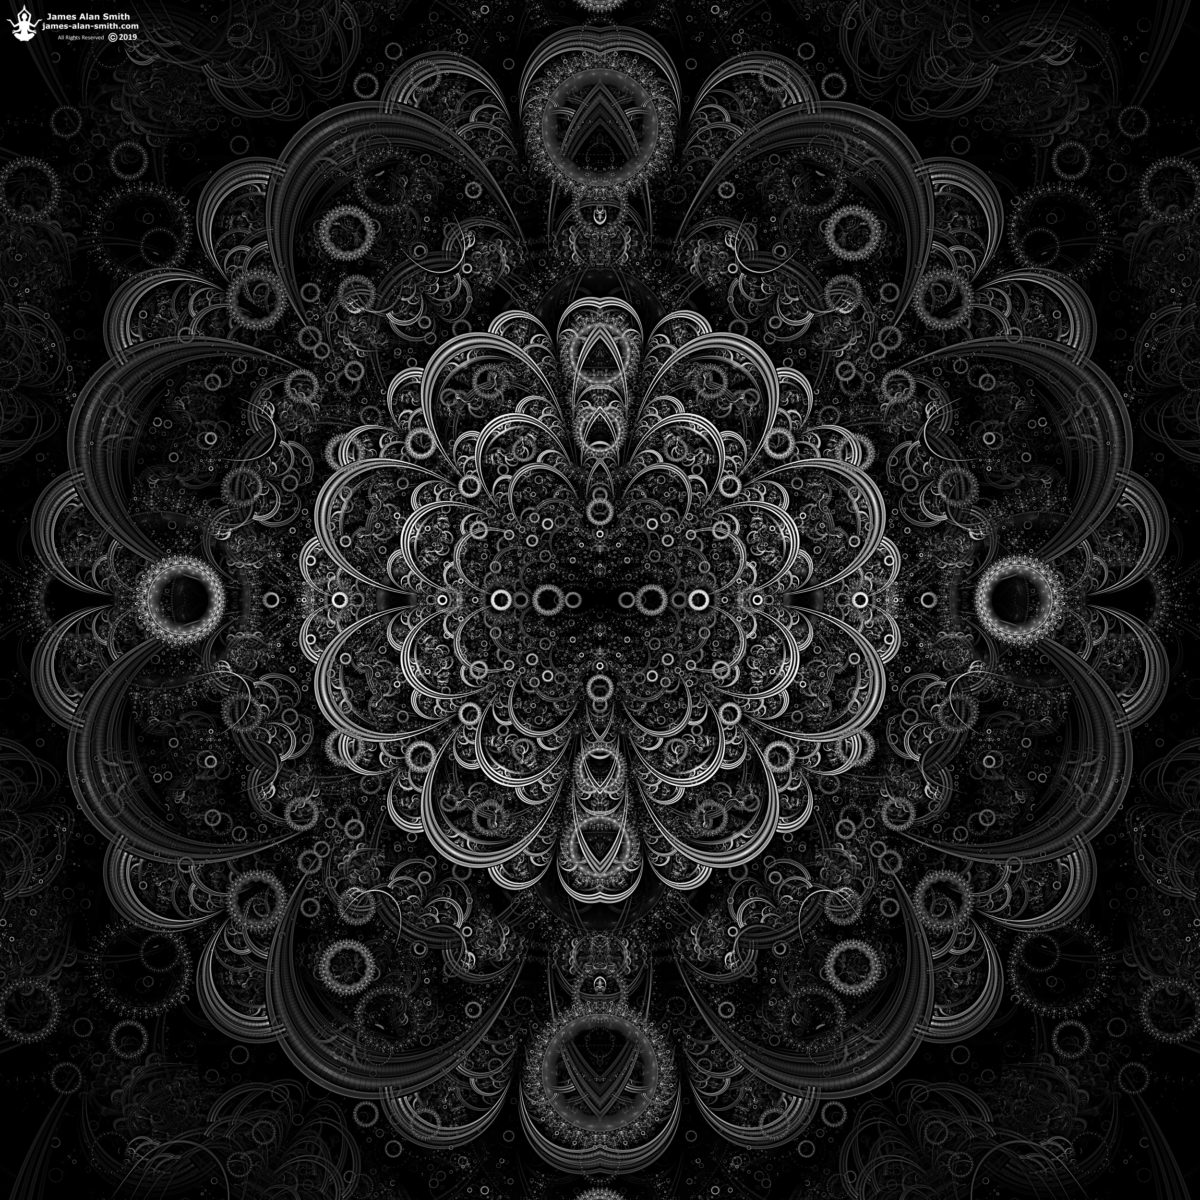 Ever-flowing Mandala: Artwork by James Alan Smith